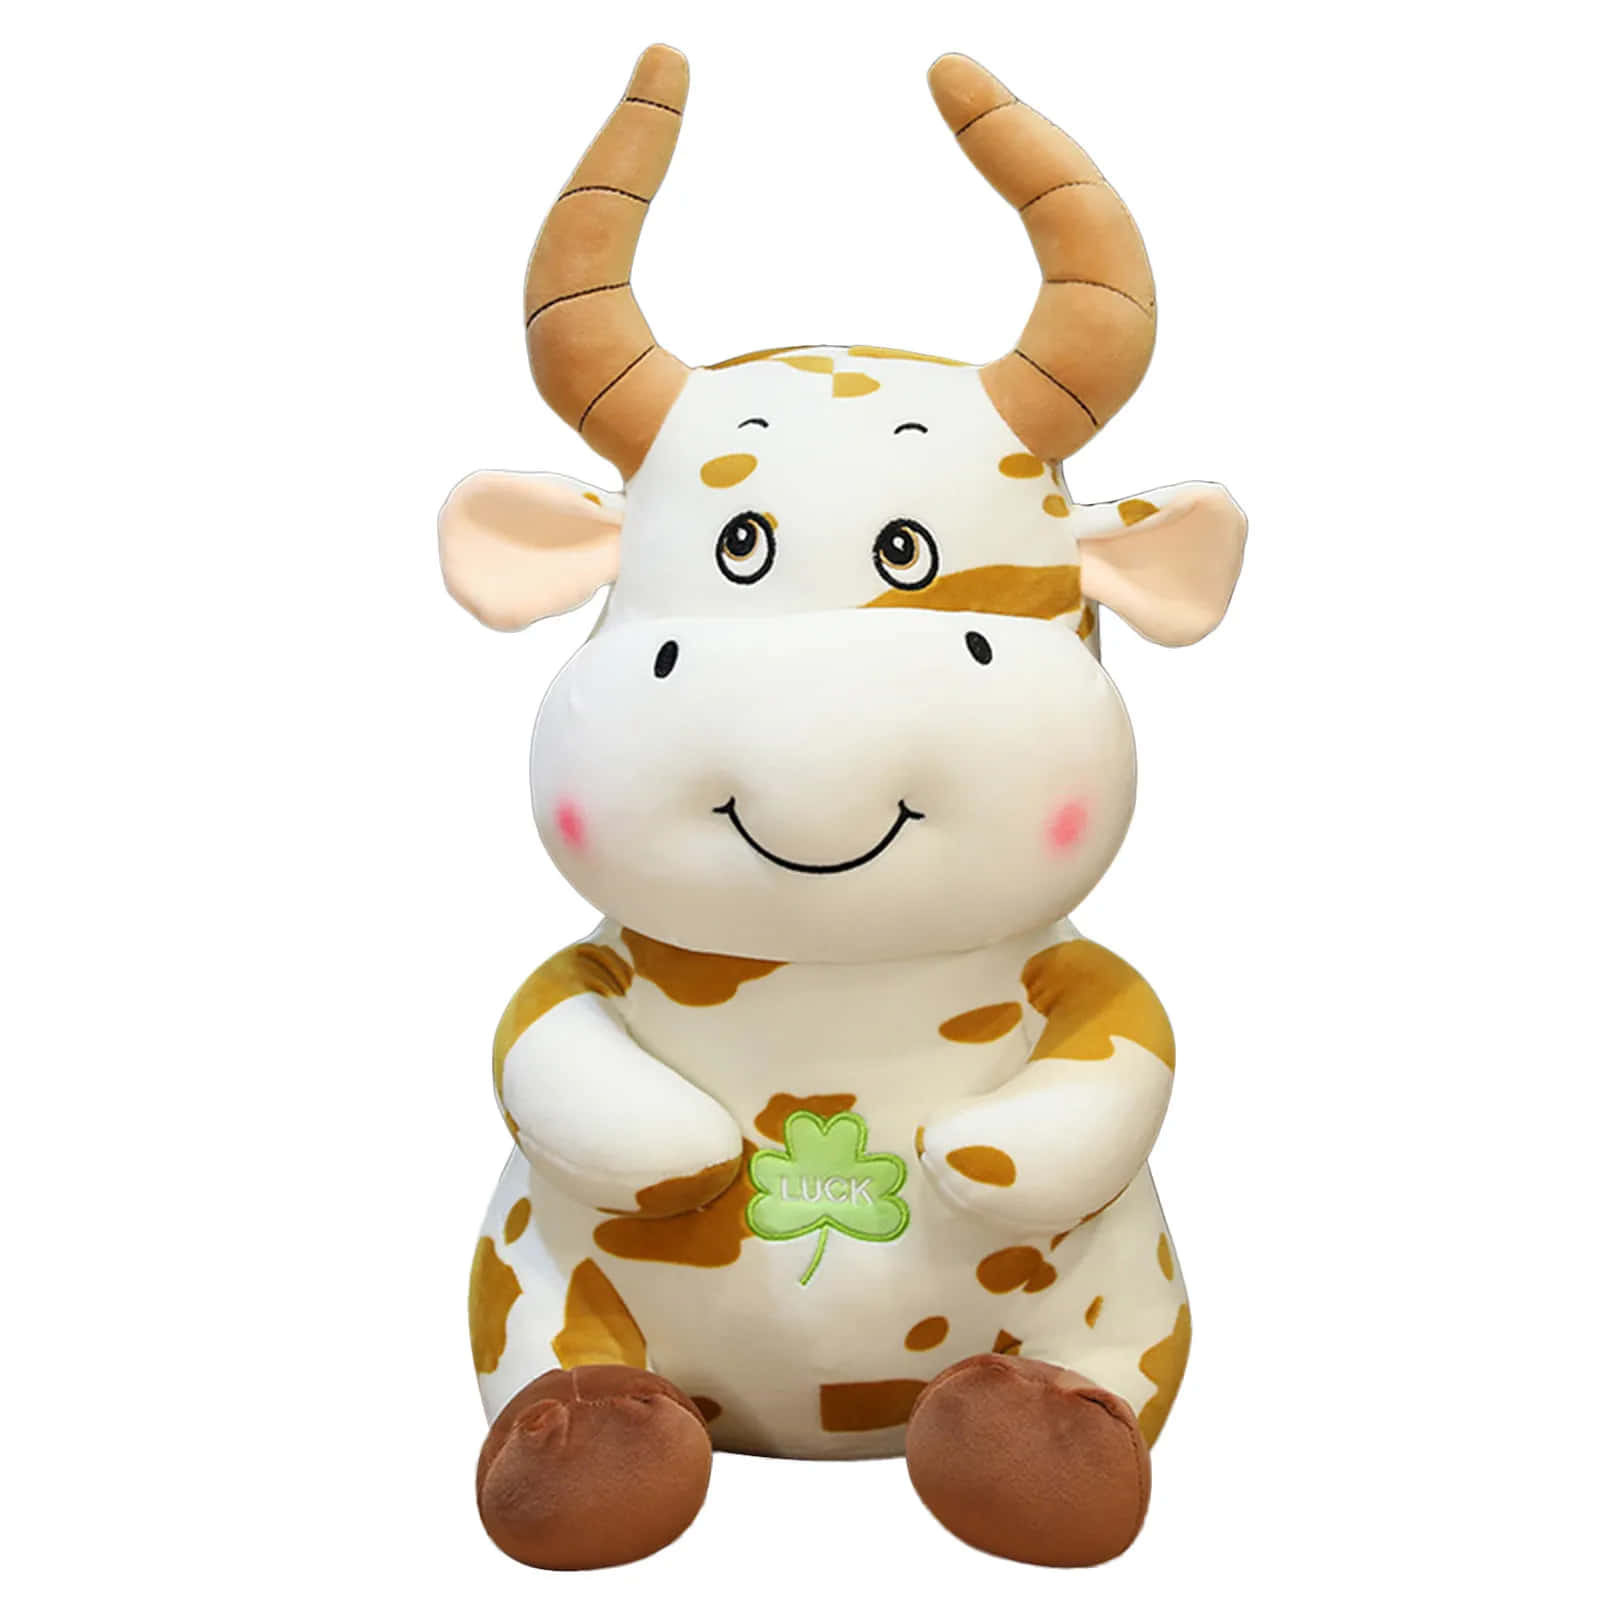 Meet Moo - the friendly cartoon cow!